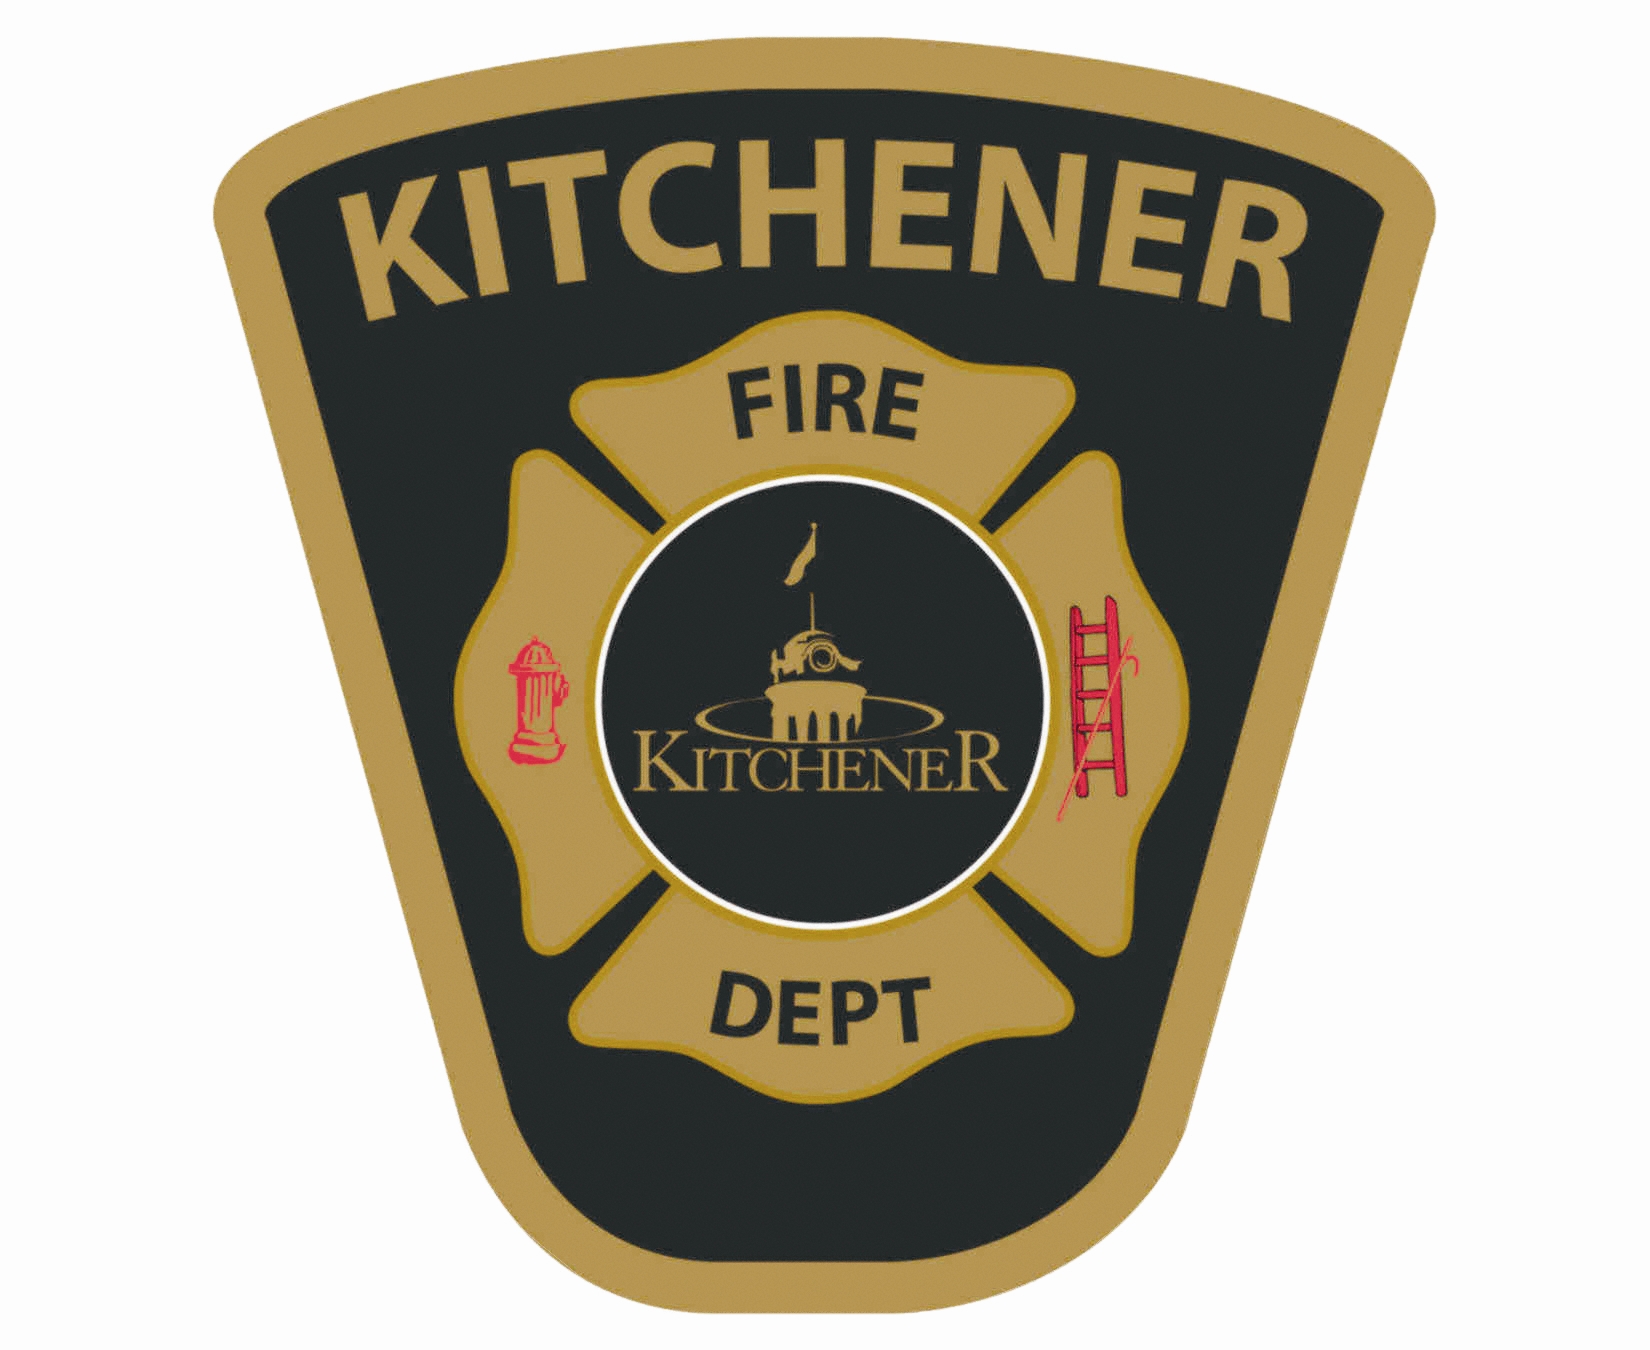 Kitchener Fire Department